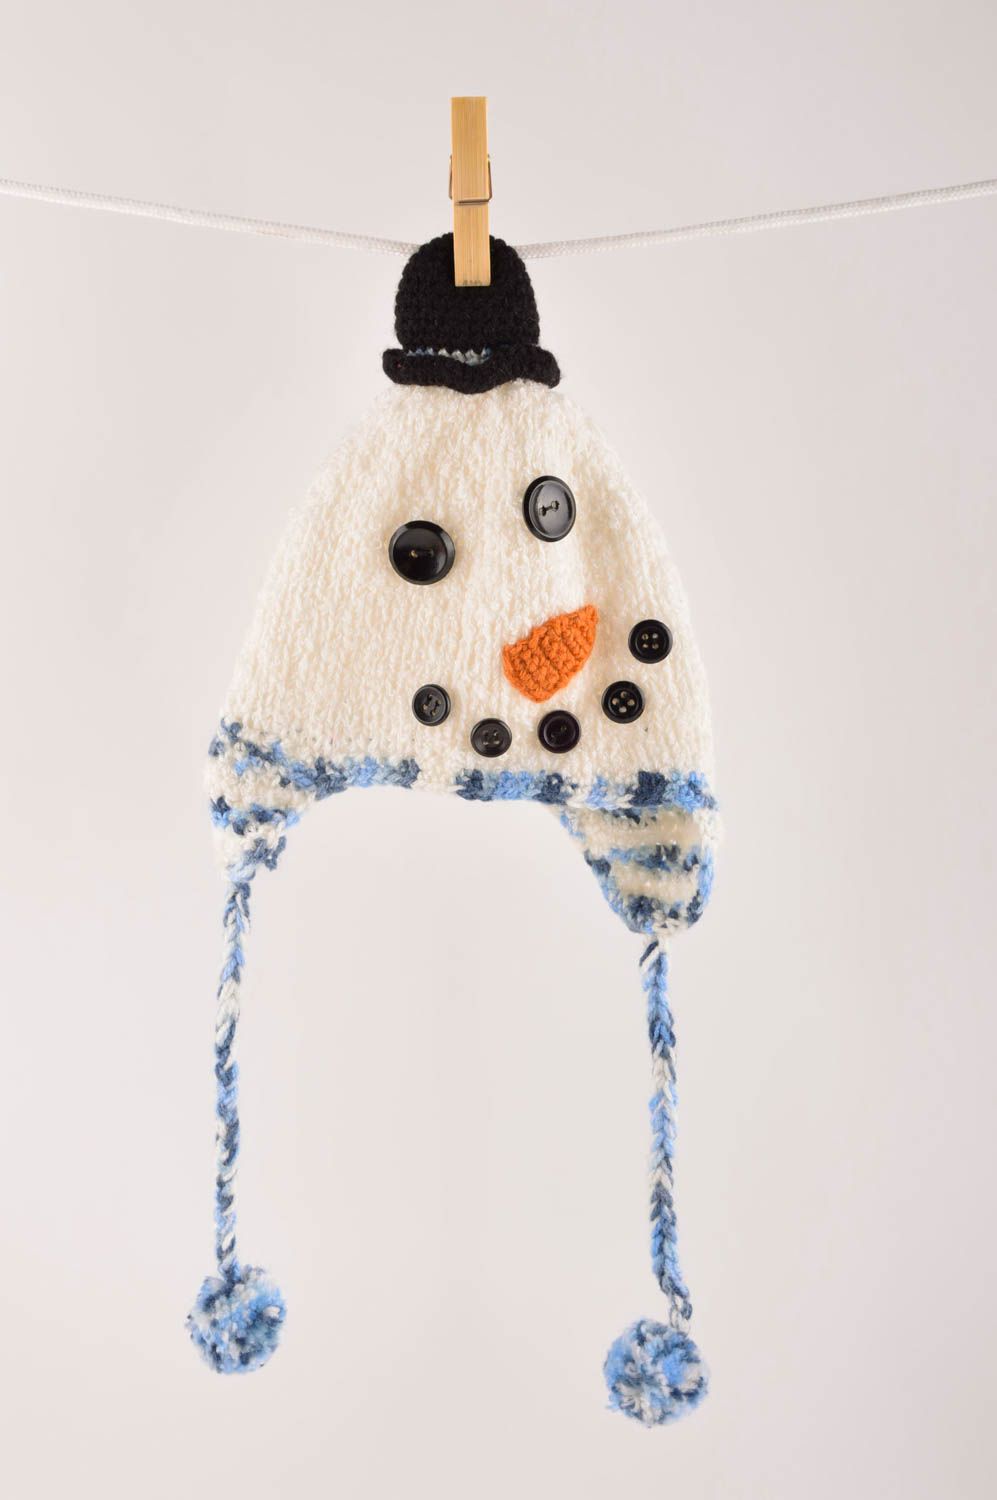 Handmade winter hat designer hat for baby unusual crochet hat gift ideas photo 1